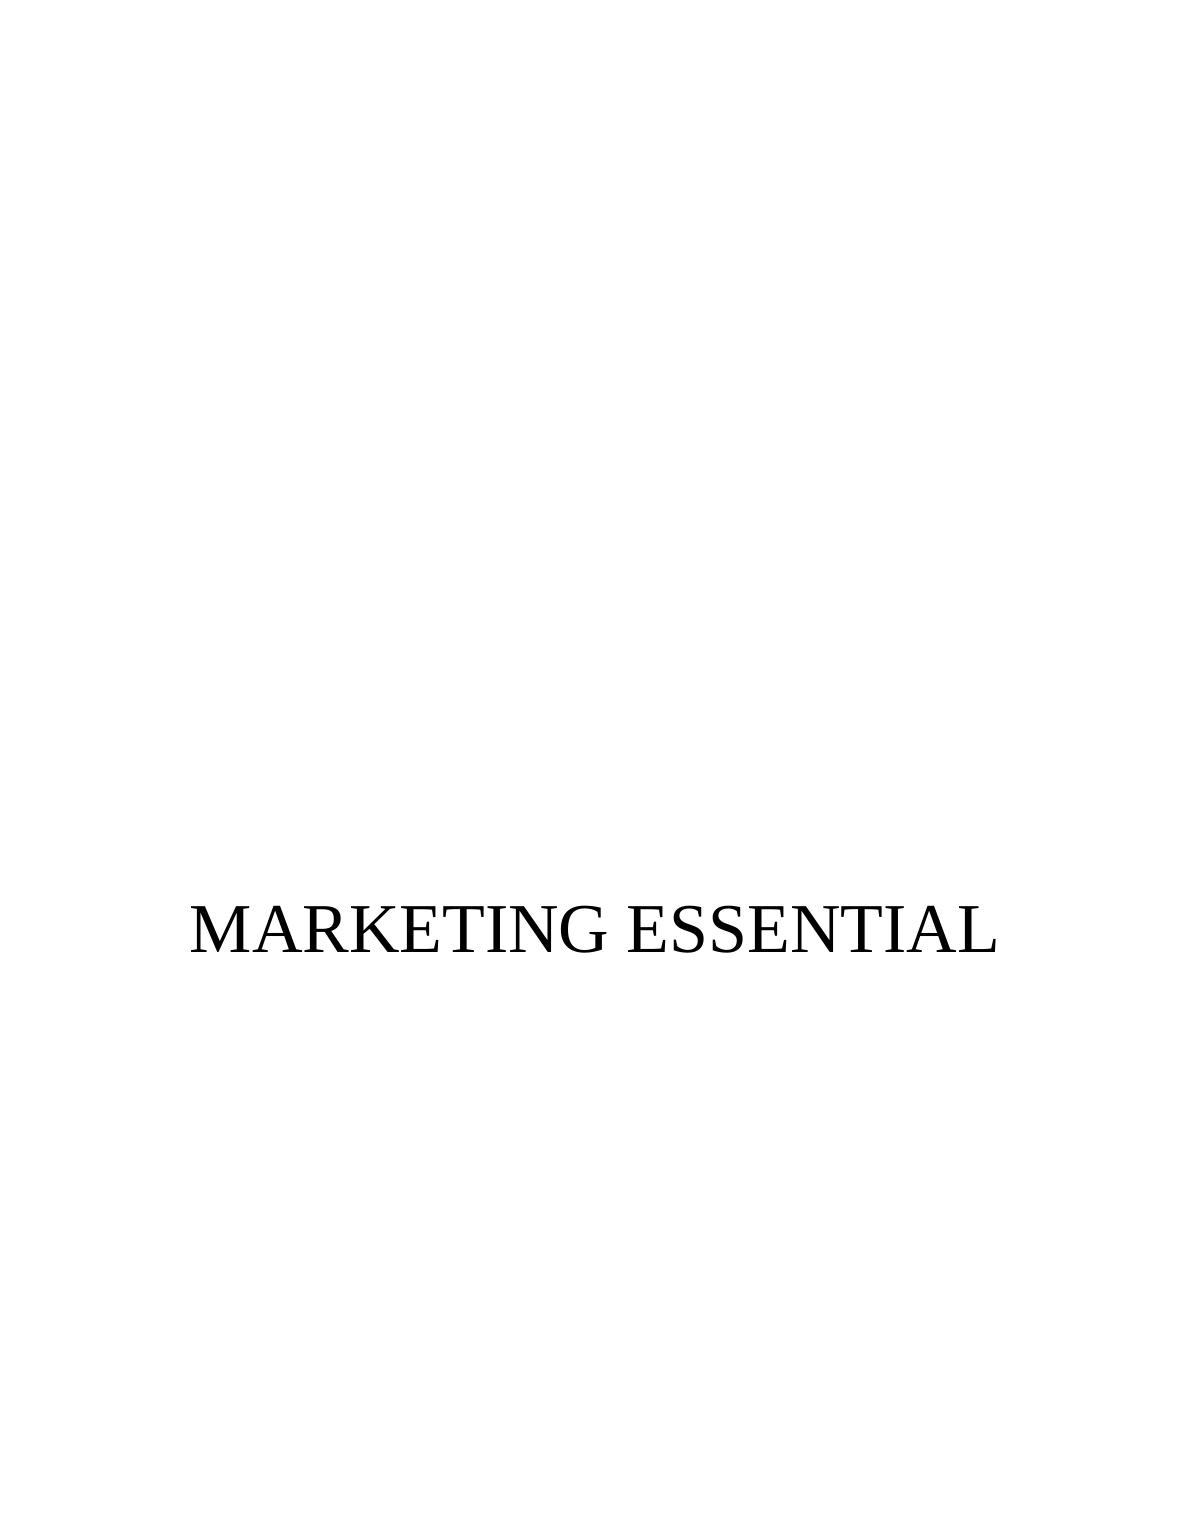 Marketing Essentials Assignment - KFC organisation_1